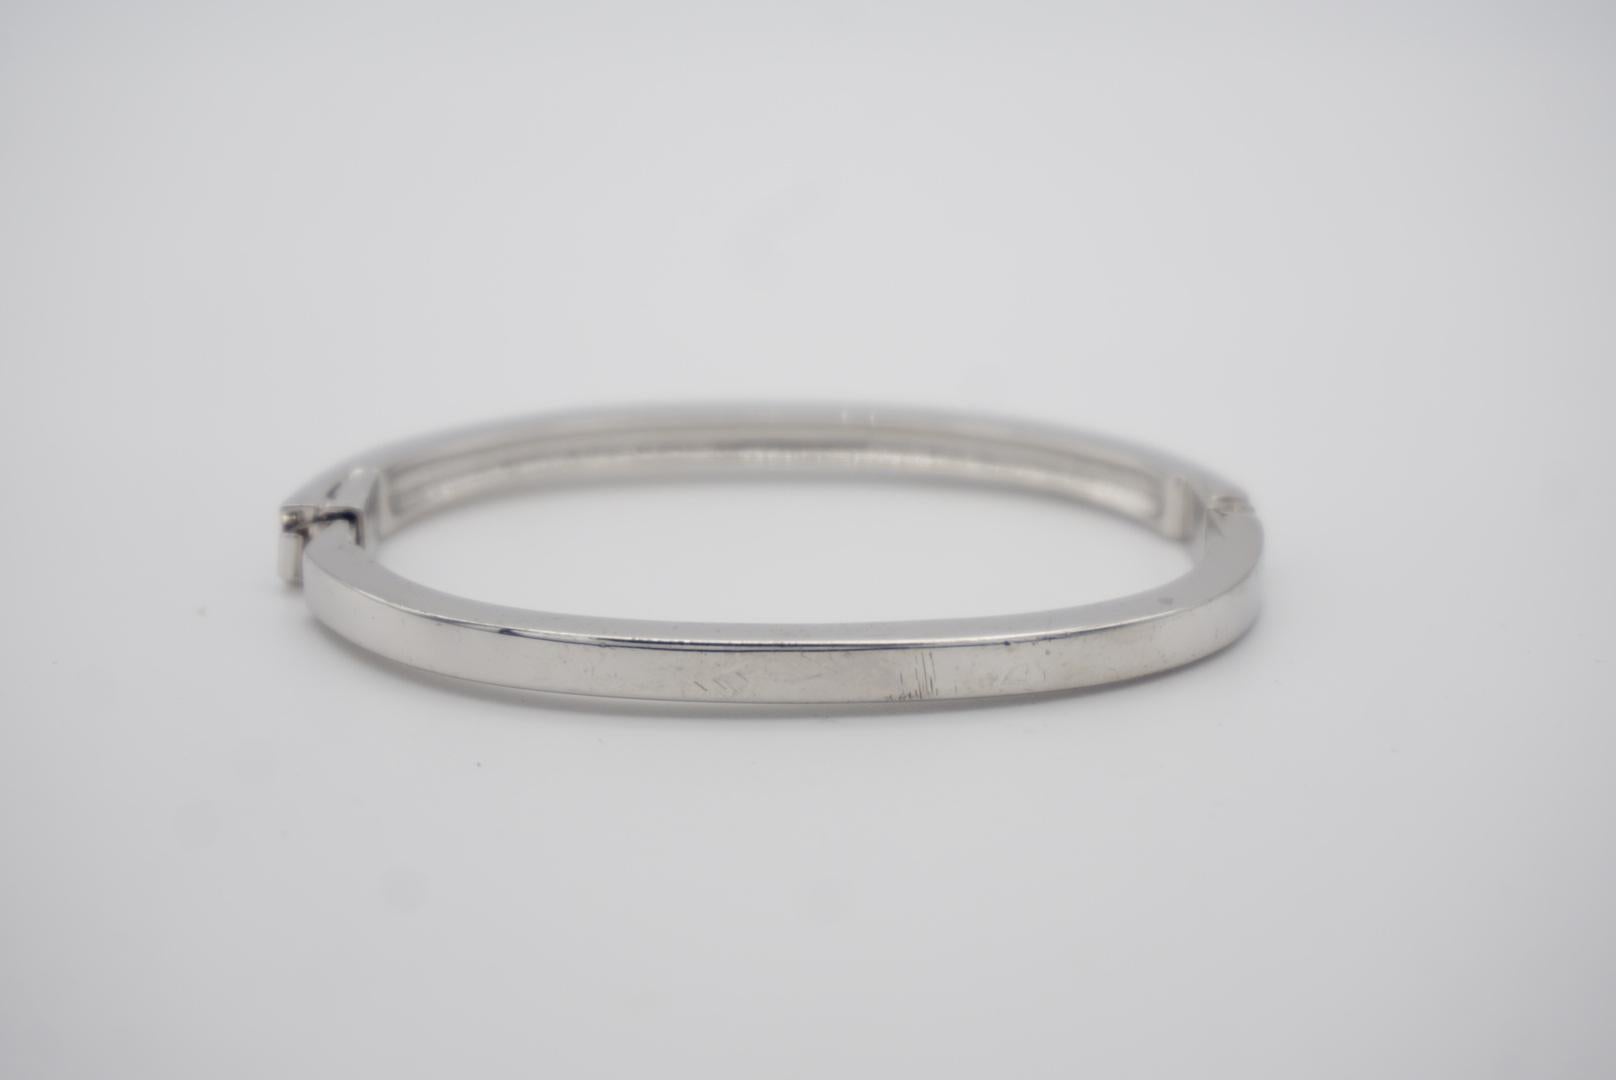 Swarovski Timeless Clear Sparkling Crystals Elegant Silver Cuff Bangle Bracelet 5